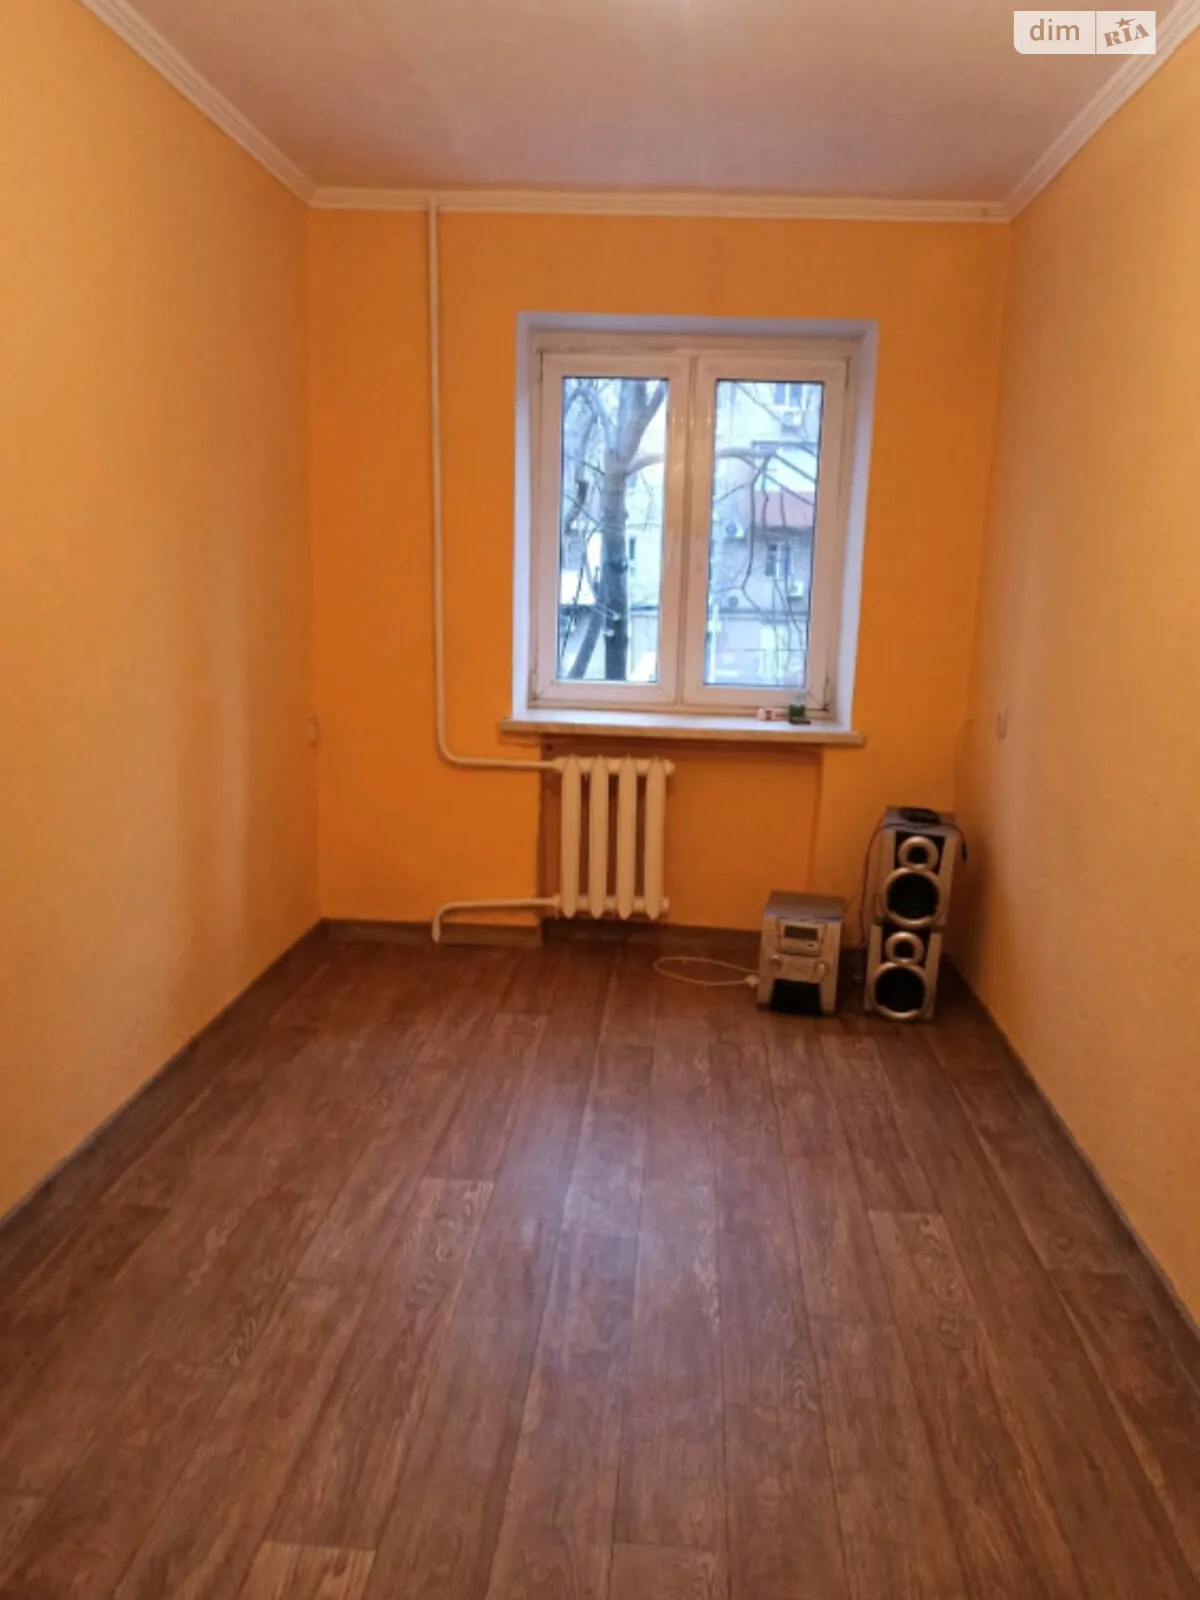 Продается комната 18 кв. м в Одессе, цена: 6500 $ - фото 1